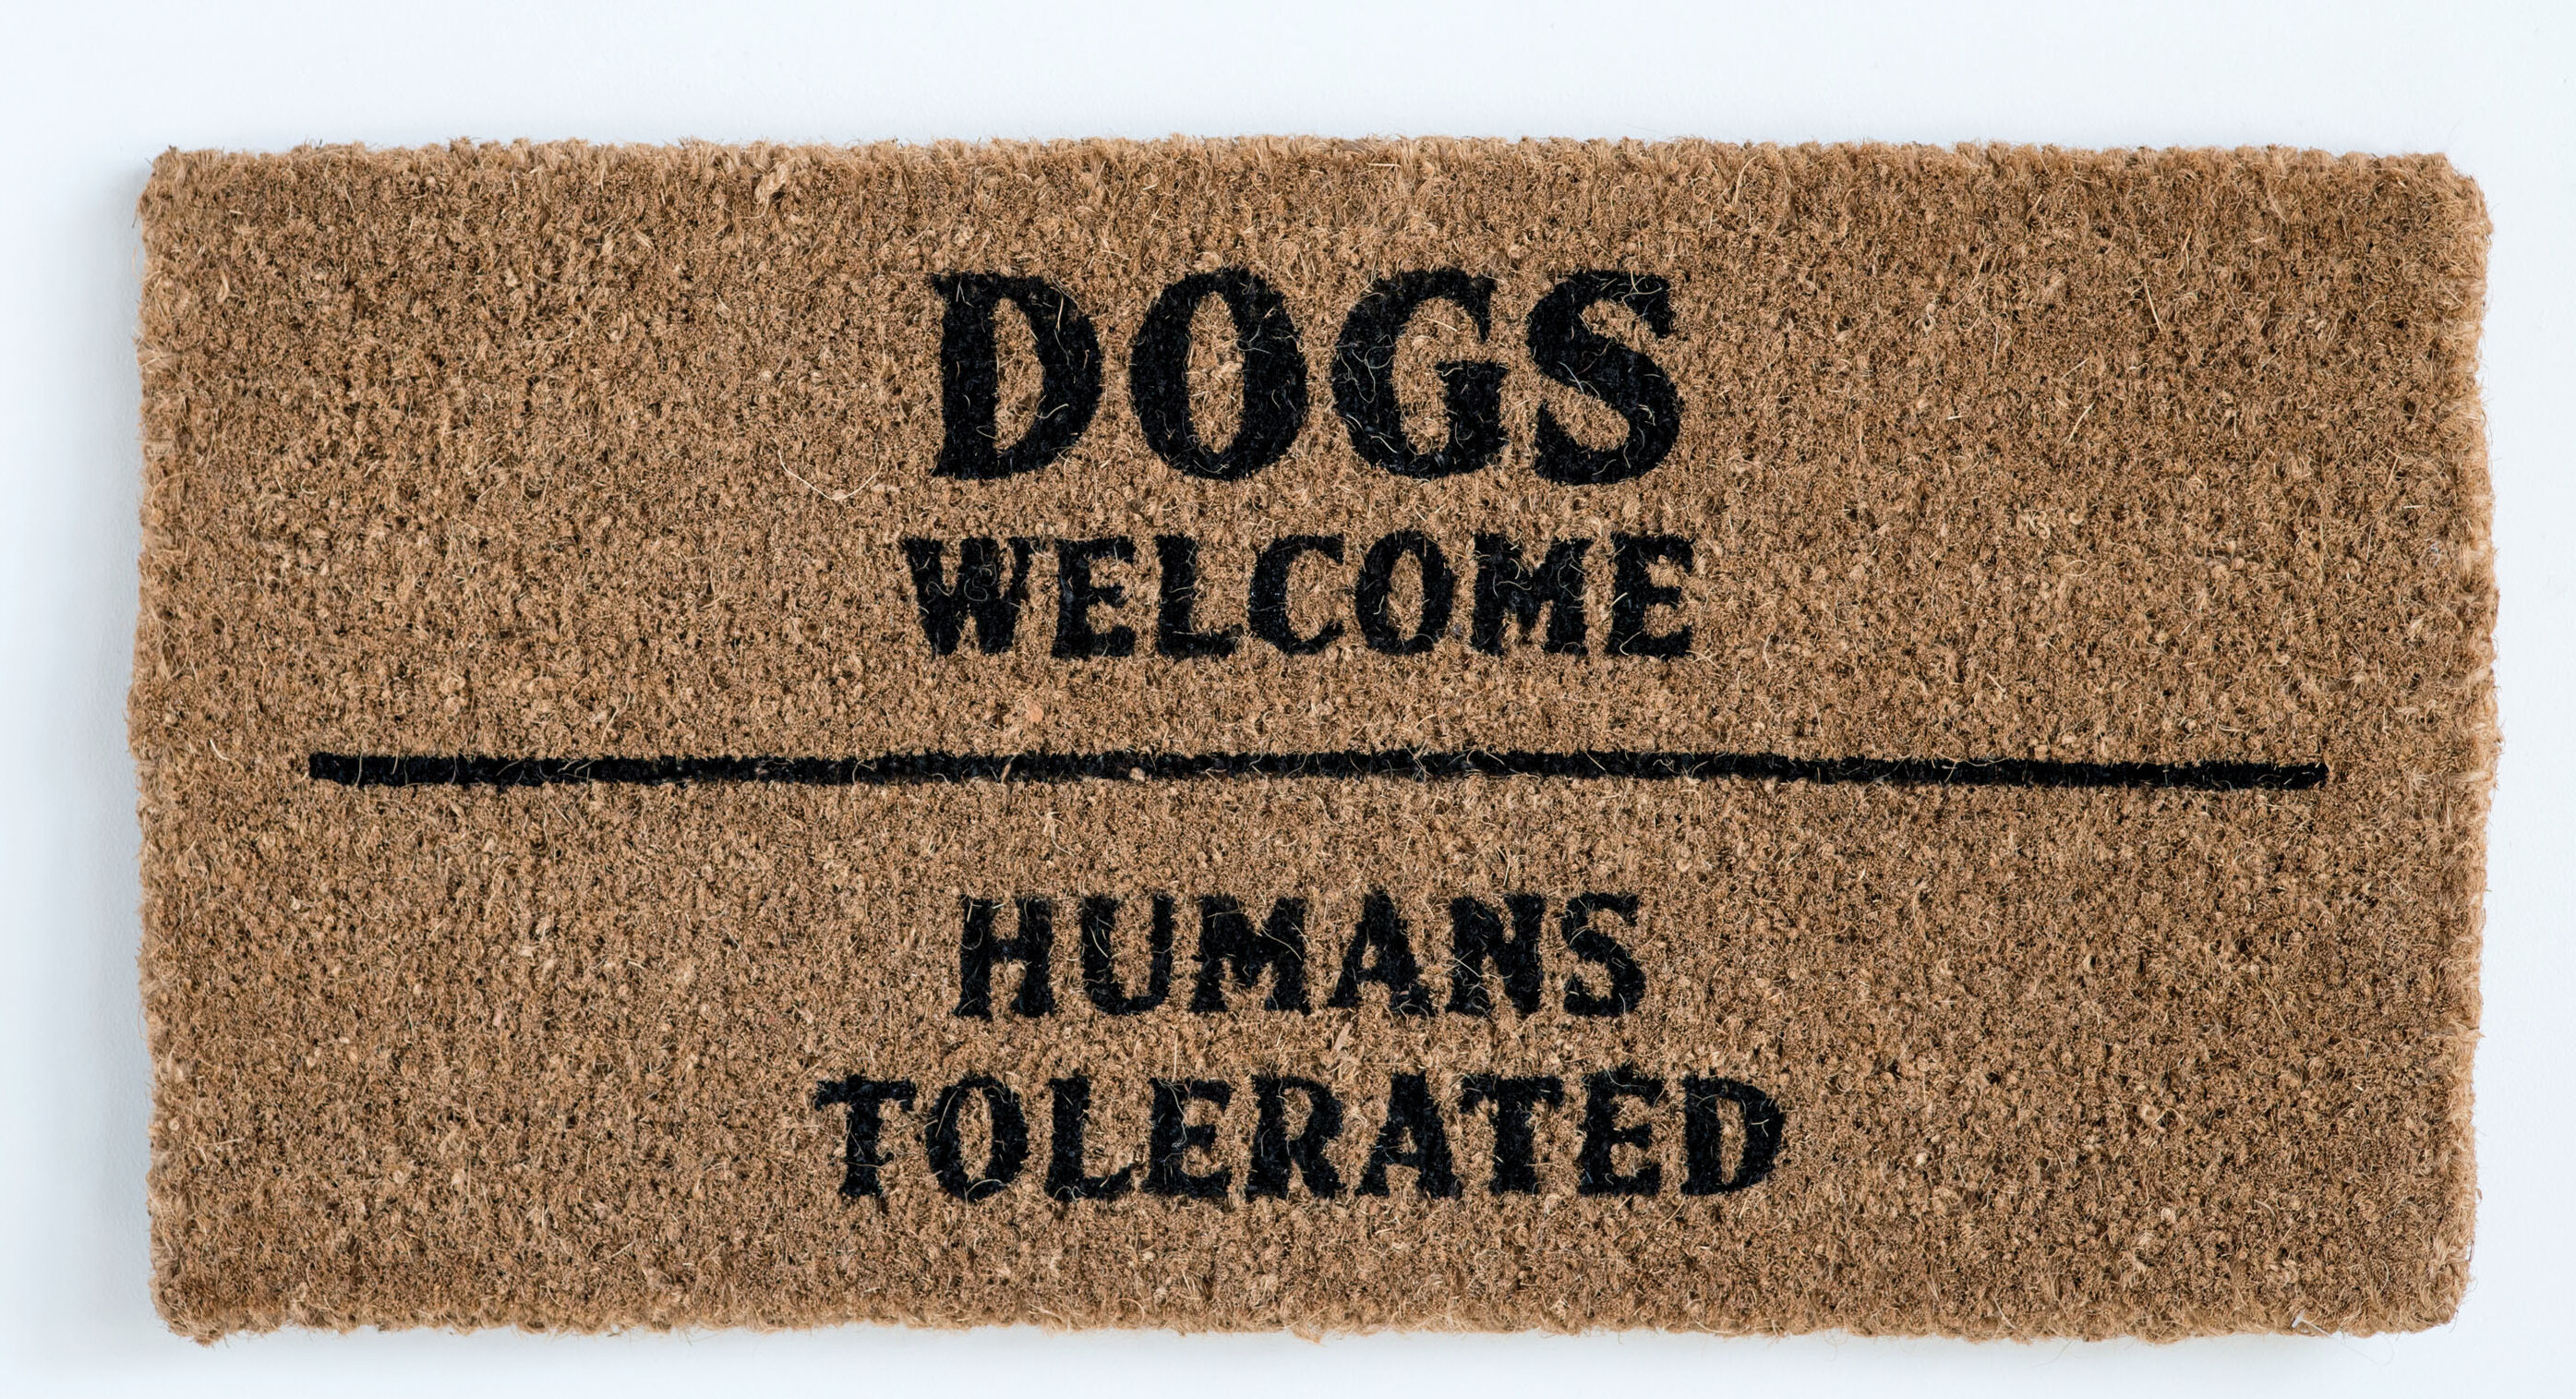 Bdsm human welcome mats doorman